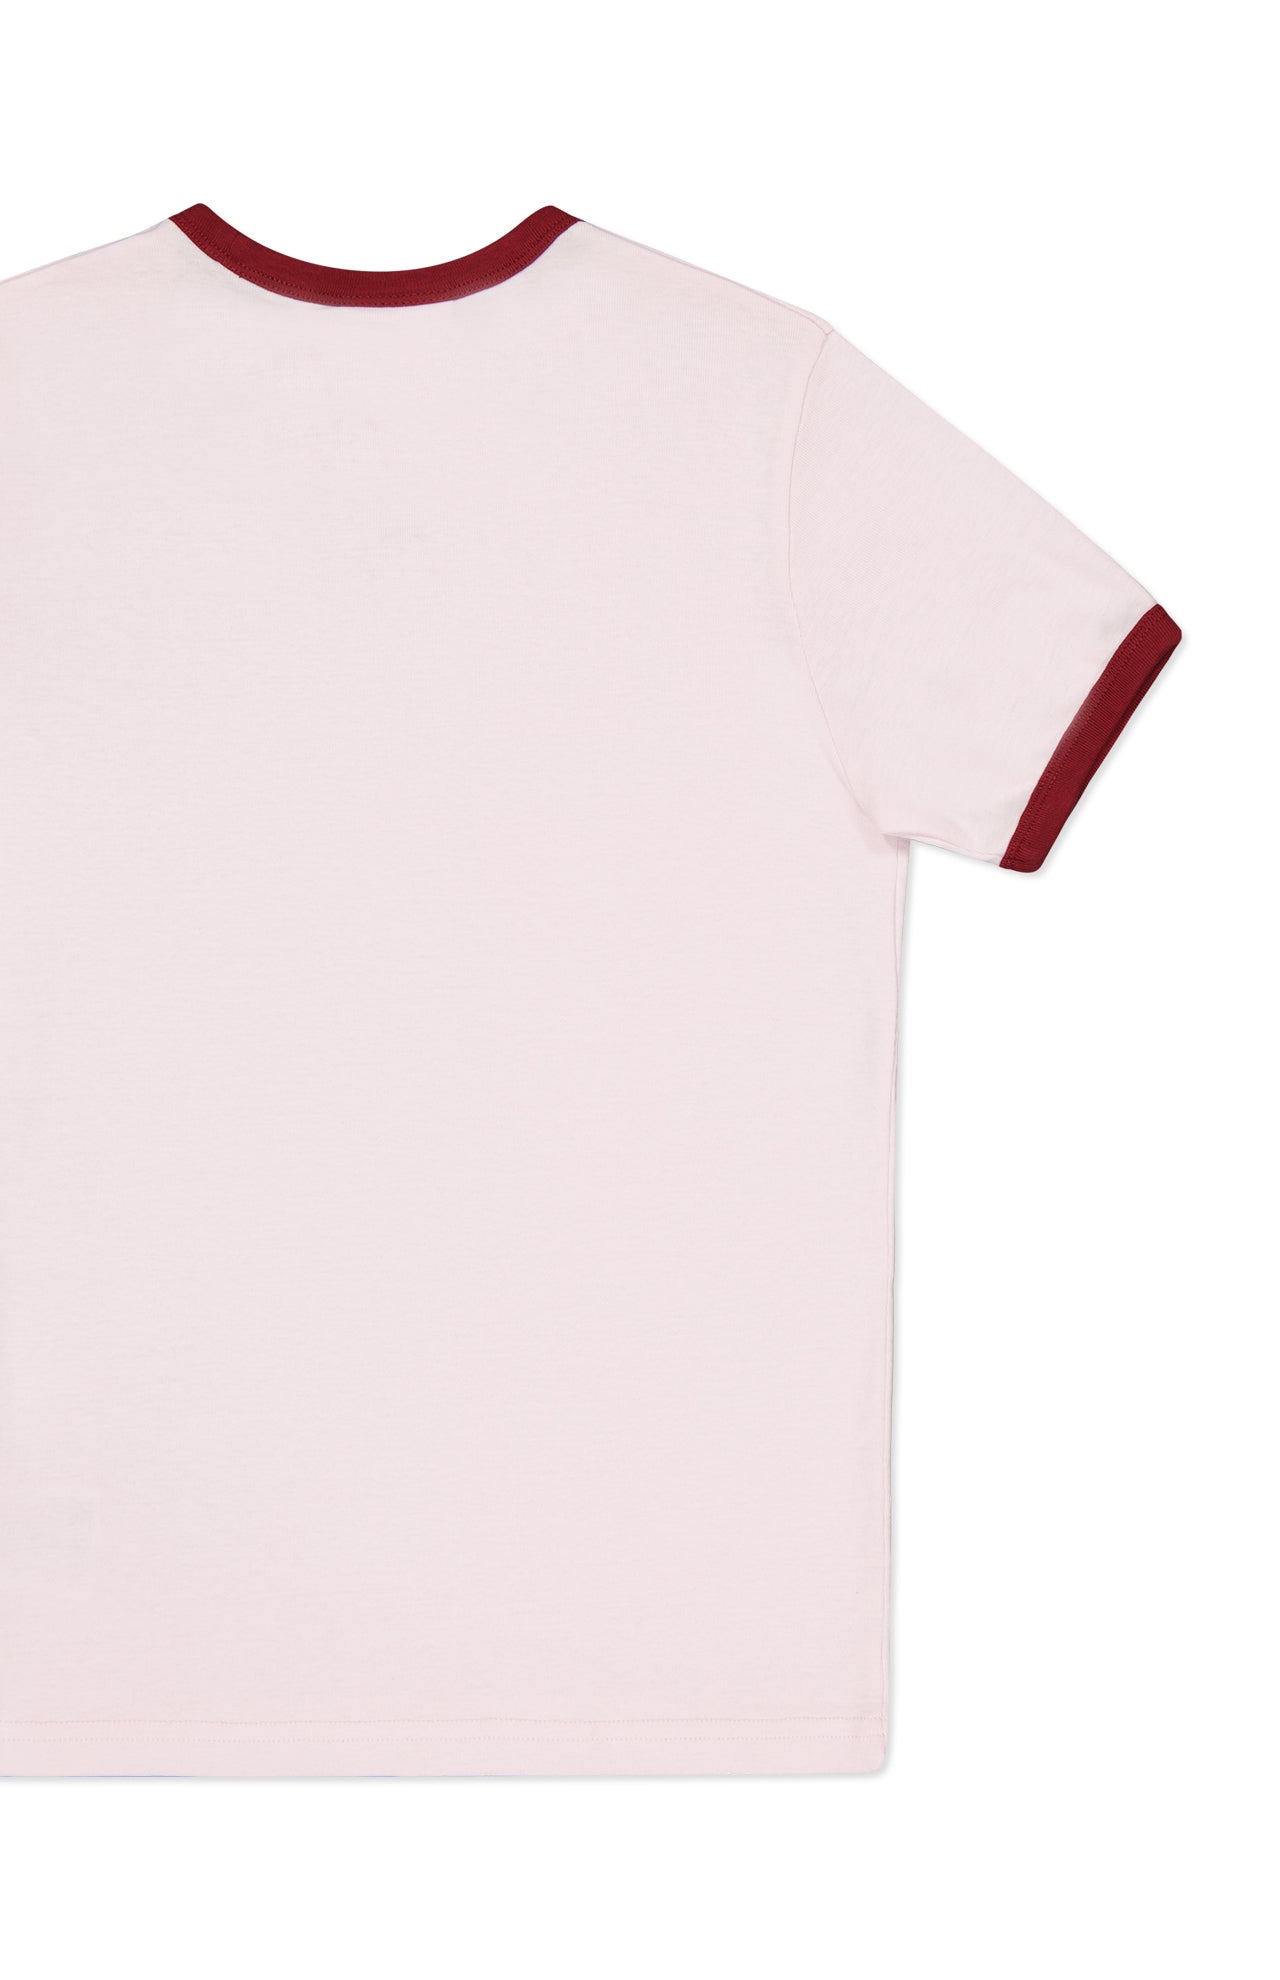 Bumpy Contrast T-Shirt (7157376122995)